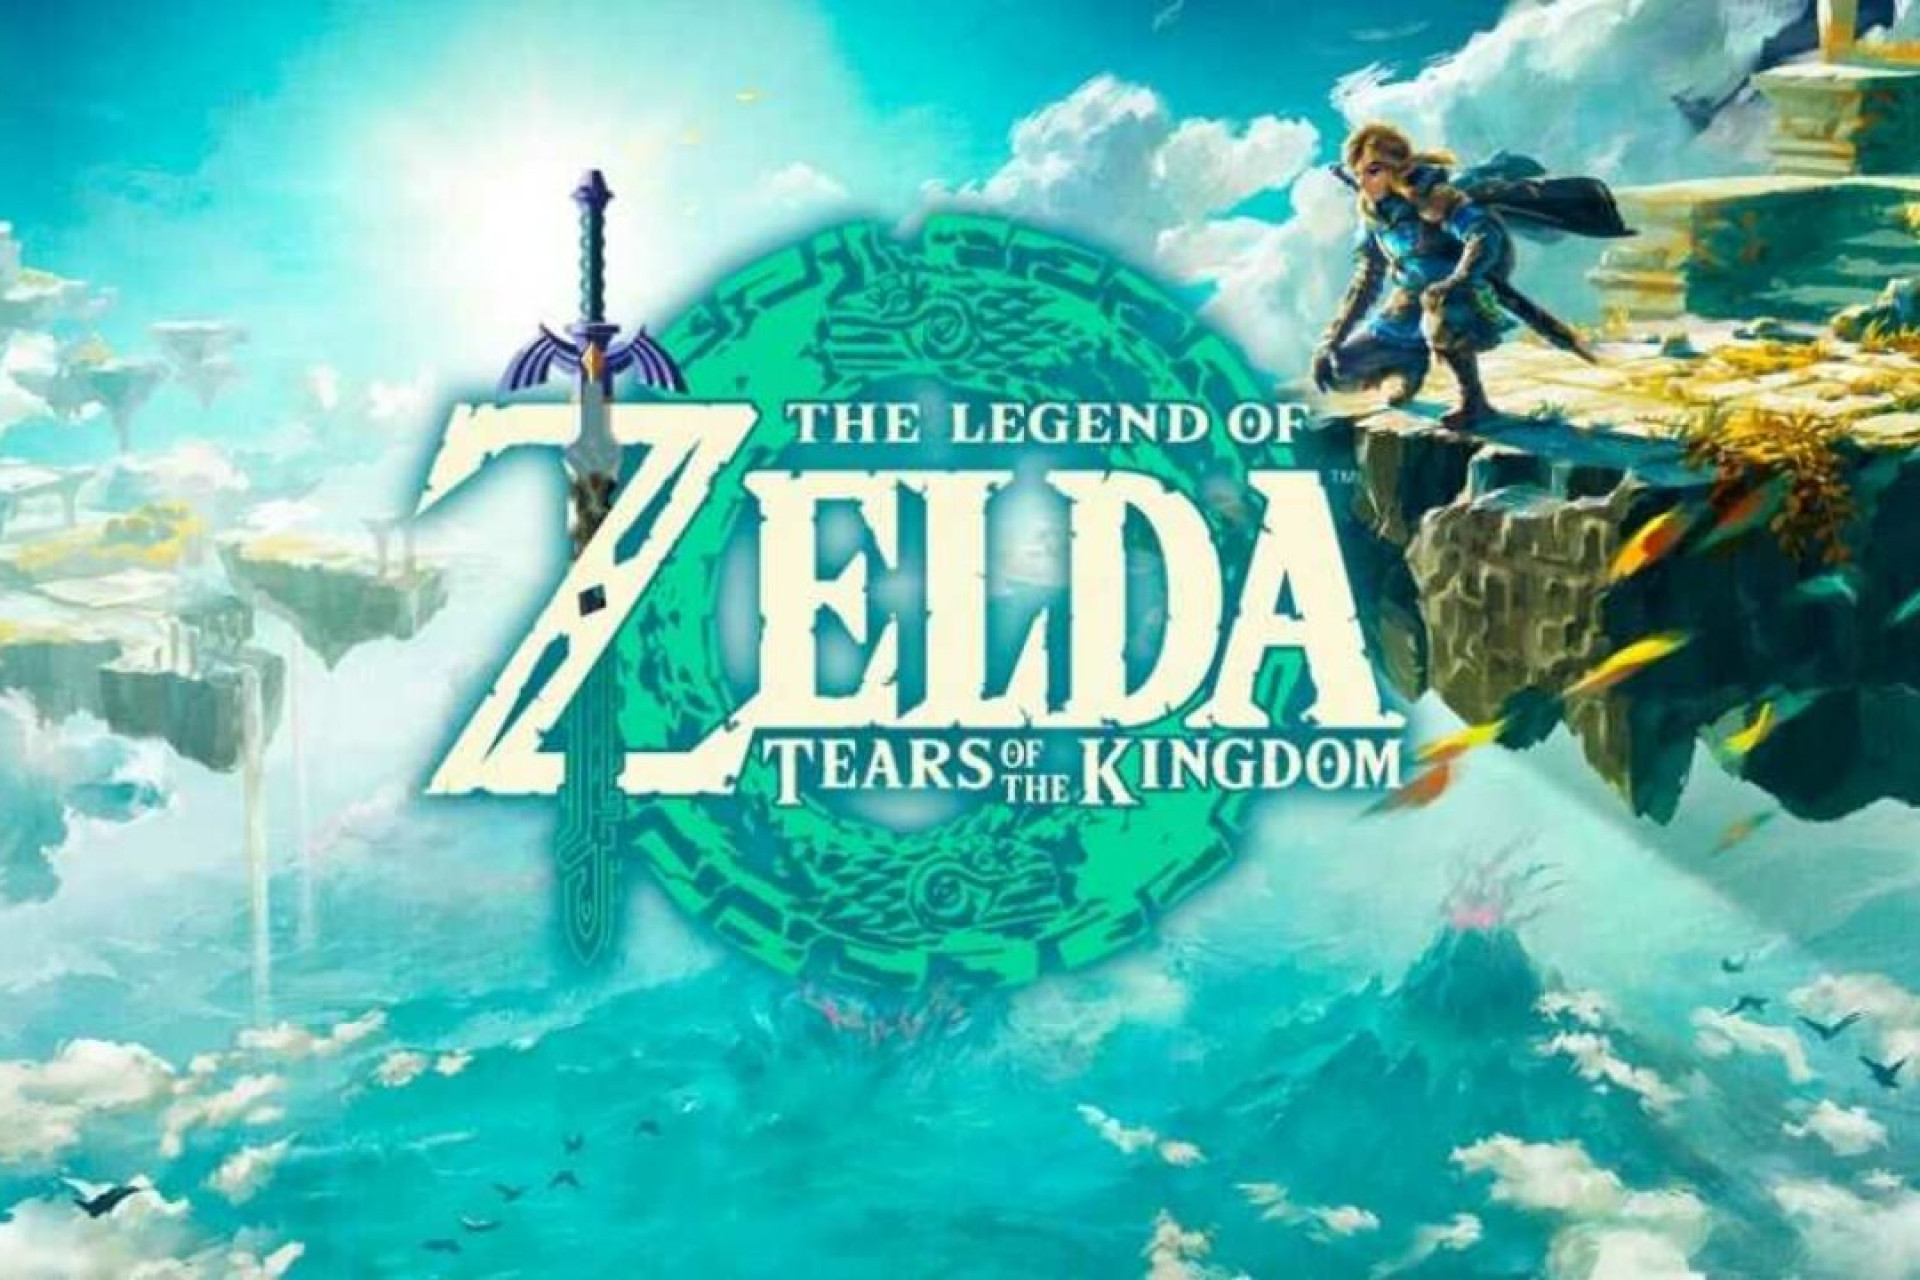 Couverture du jeu, Zelda : Tears of the kingdom